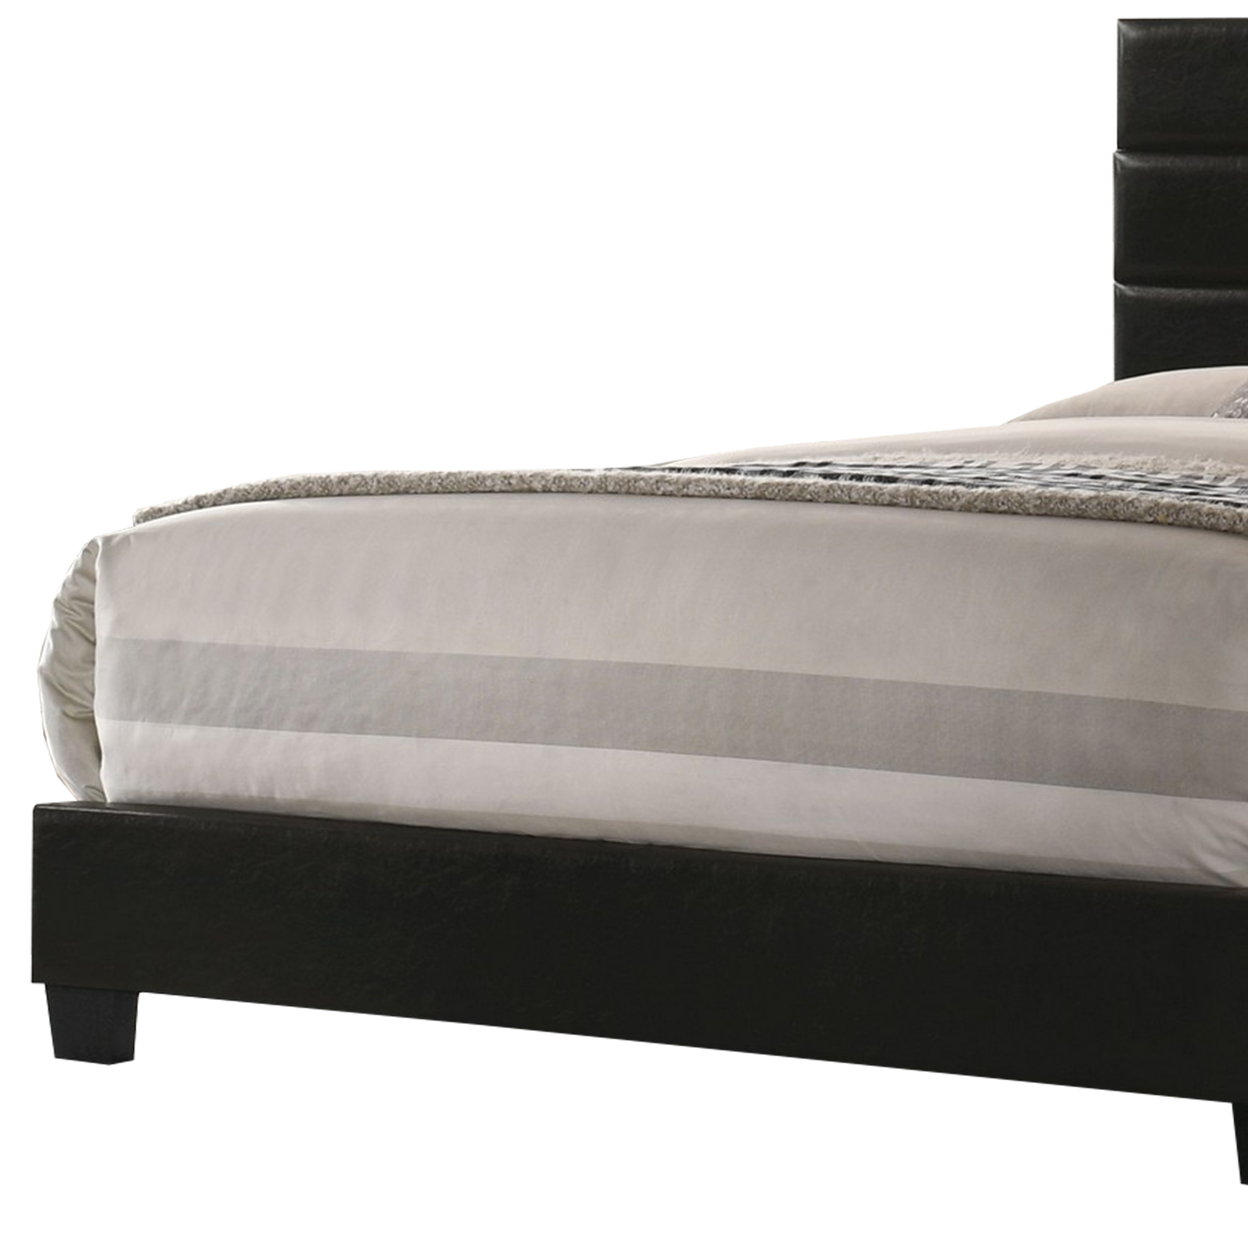 Leatherette Upholstered King Bed With Panel Headboard, Black- Saltoro Sherpi